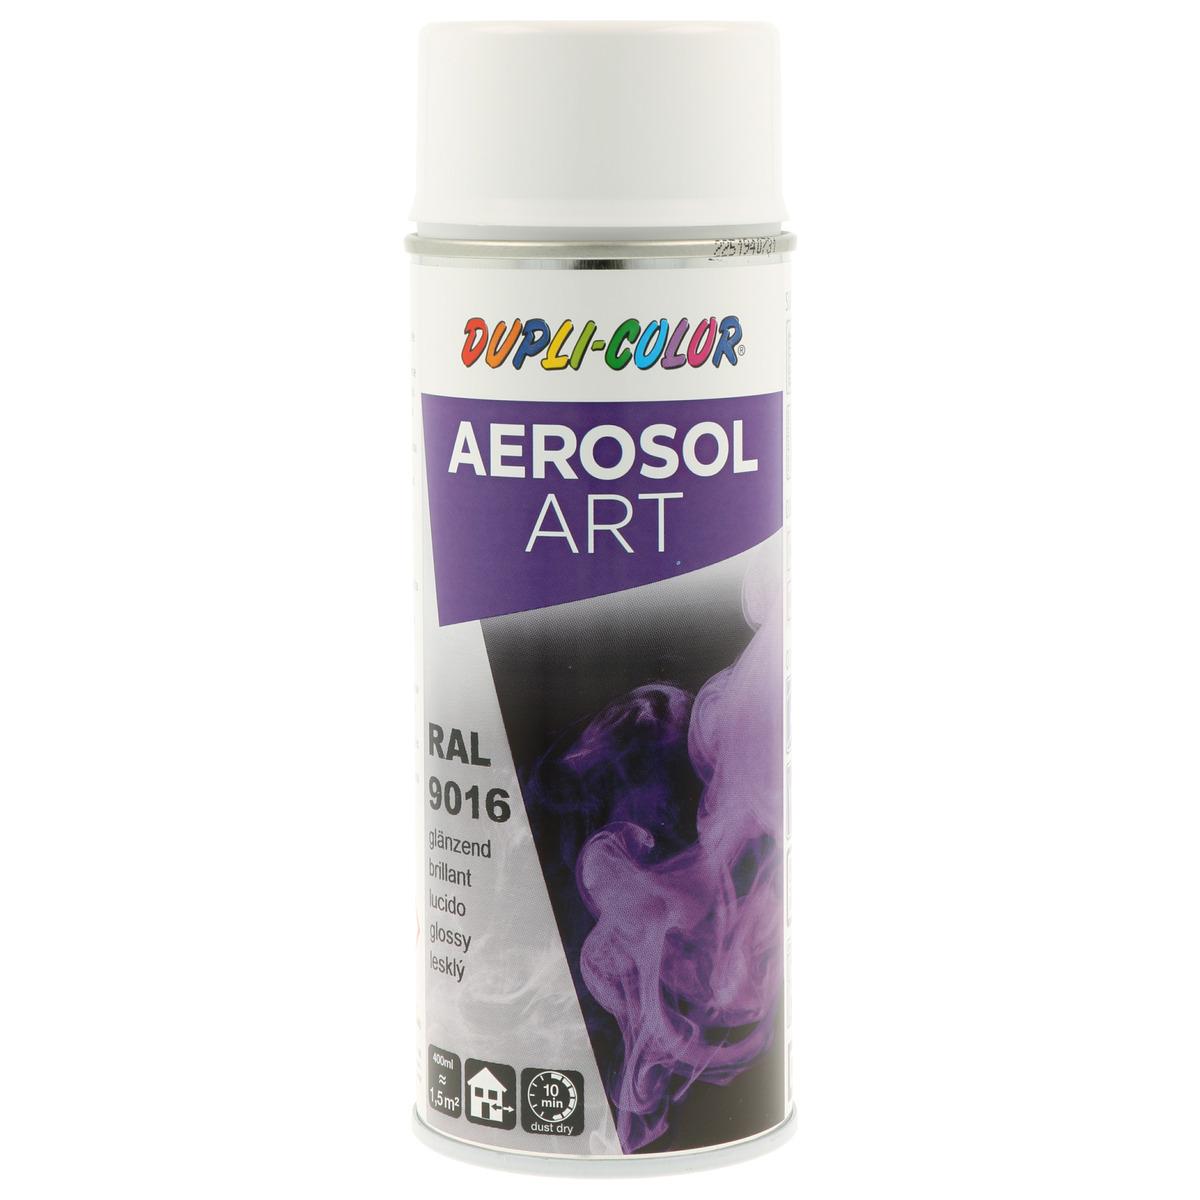 DUPLI-COLOR Sprühdose "Aerosol Art", RAL 9016, Verkehrsweiß, glänzend, 400 ml